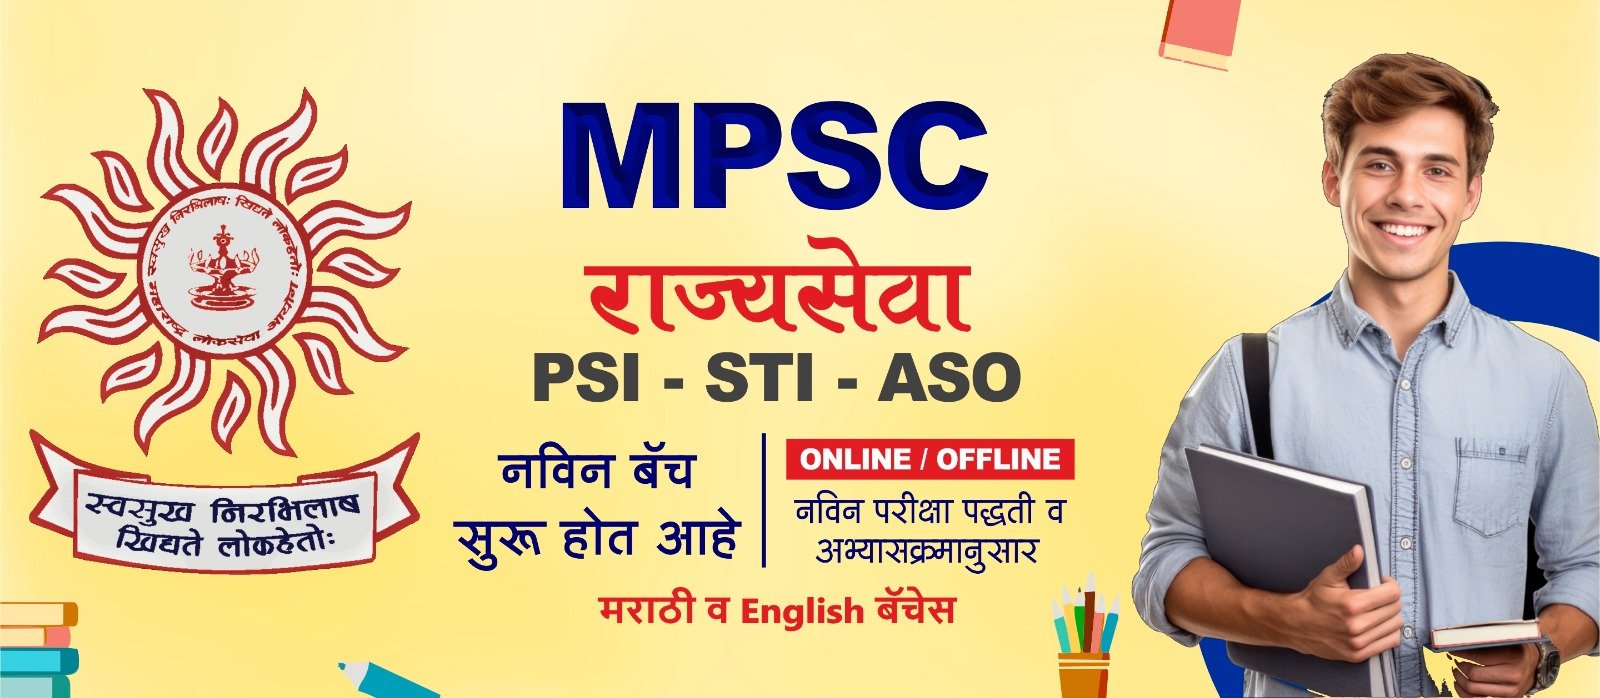 Best MPSC Coaching Classes in Kalyan - Best MPSC, UPSC Classes In Kalyan